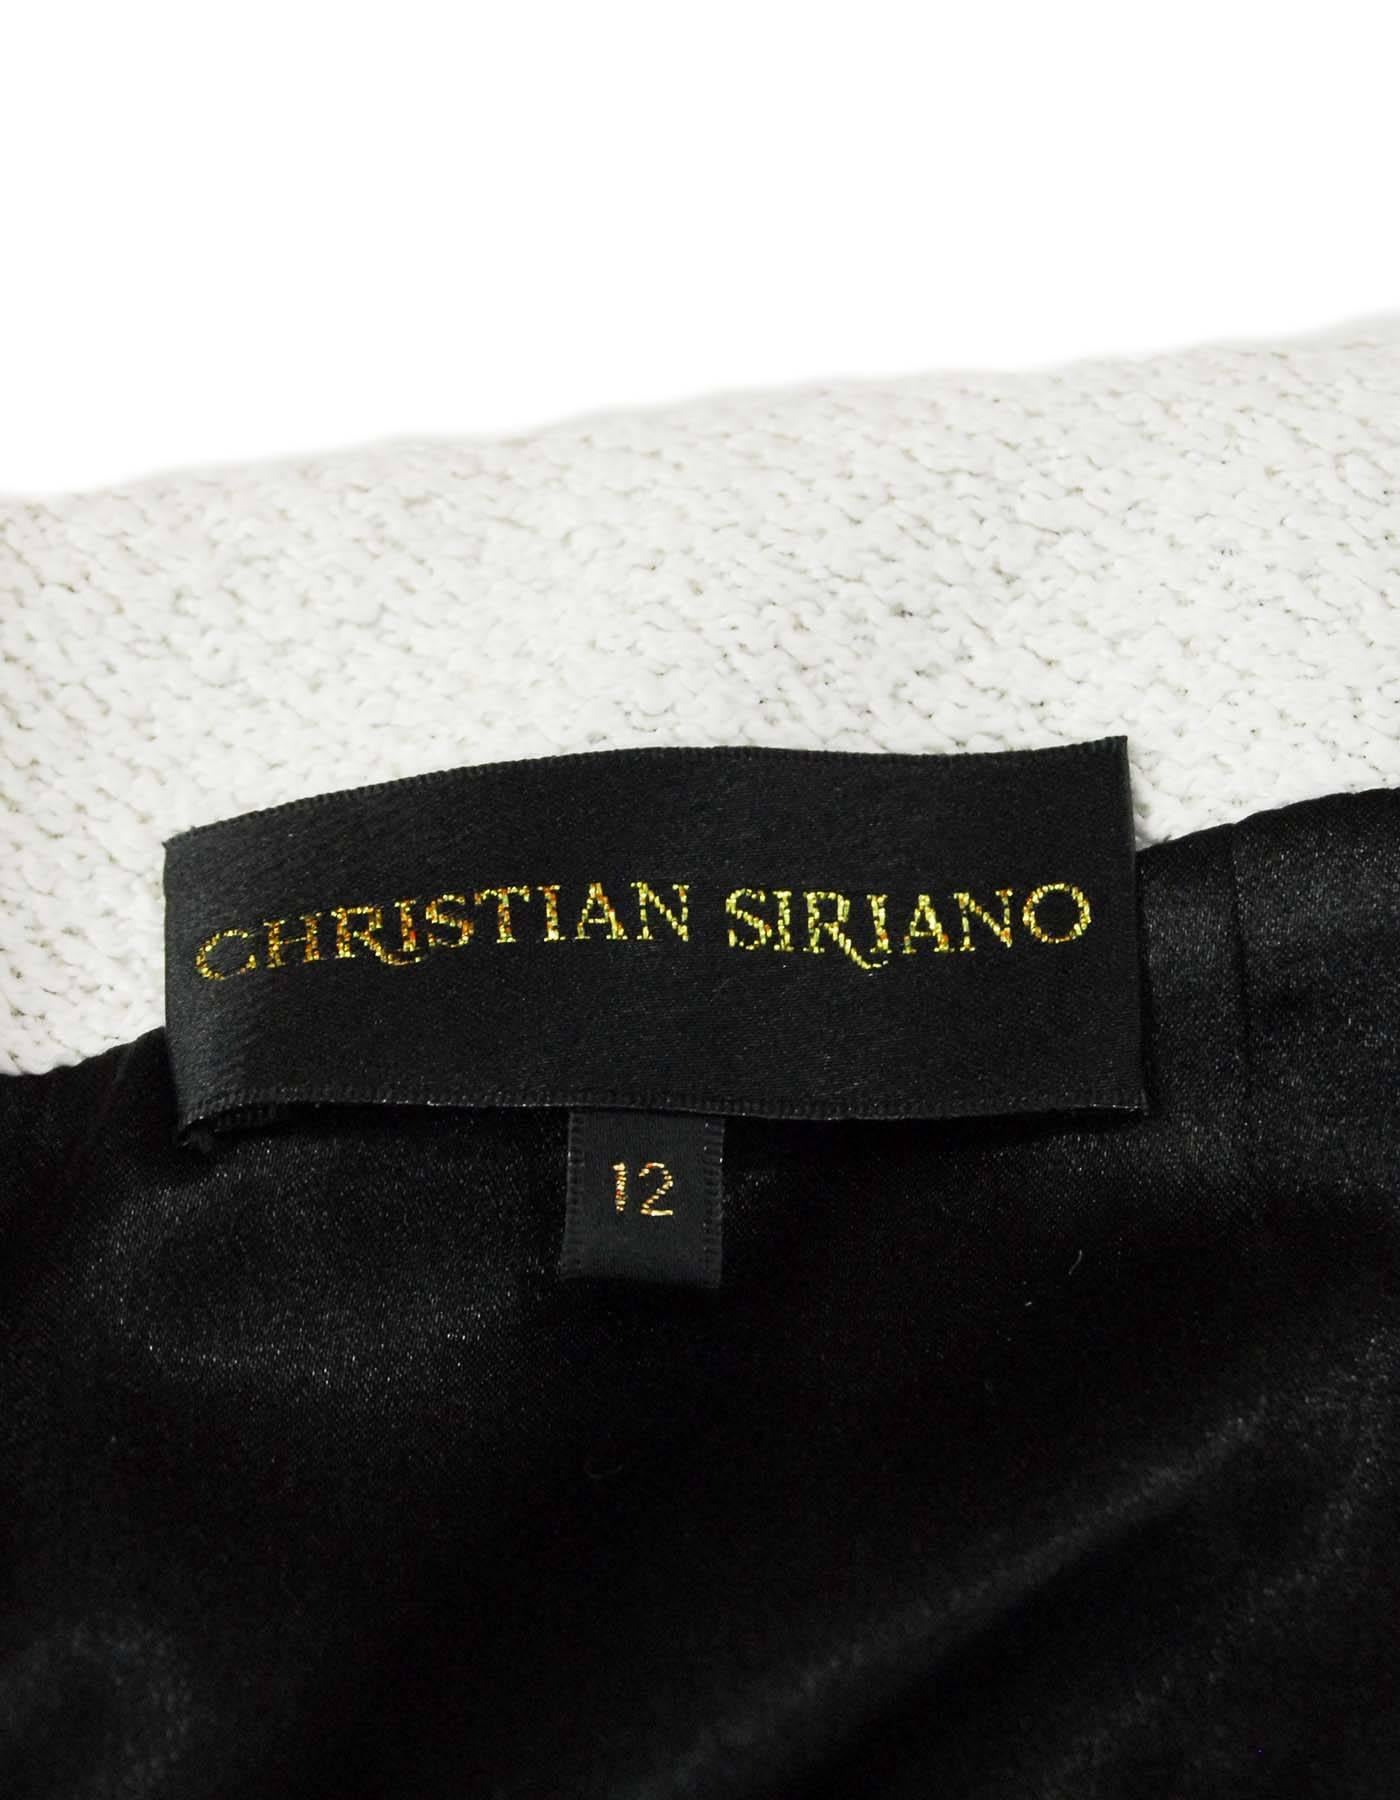 Gray Christian Siriano White Strapless Dress Sz 12